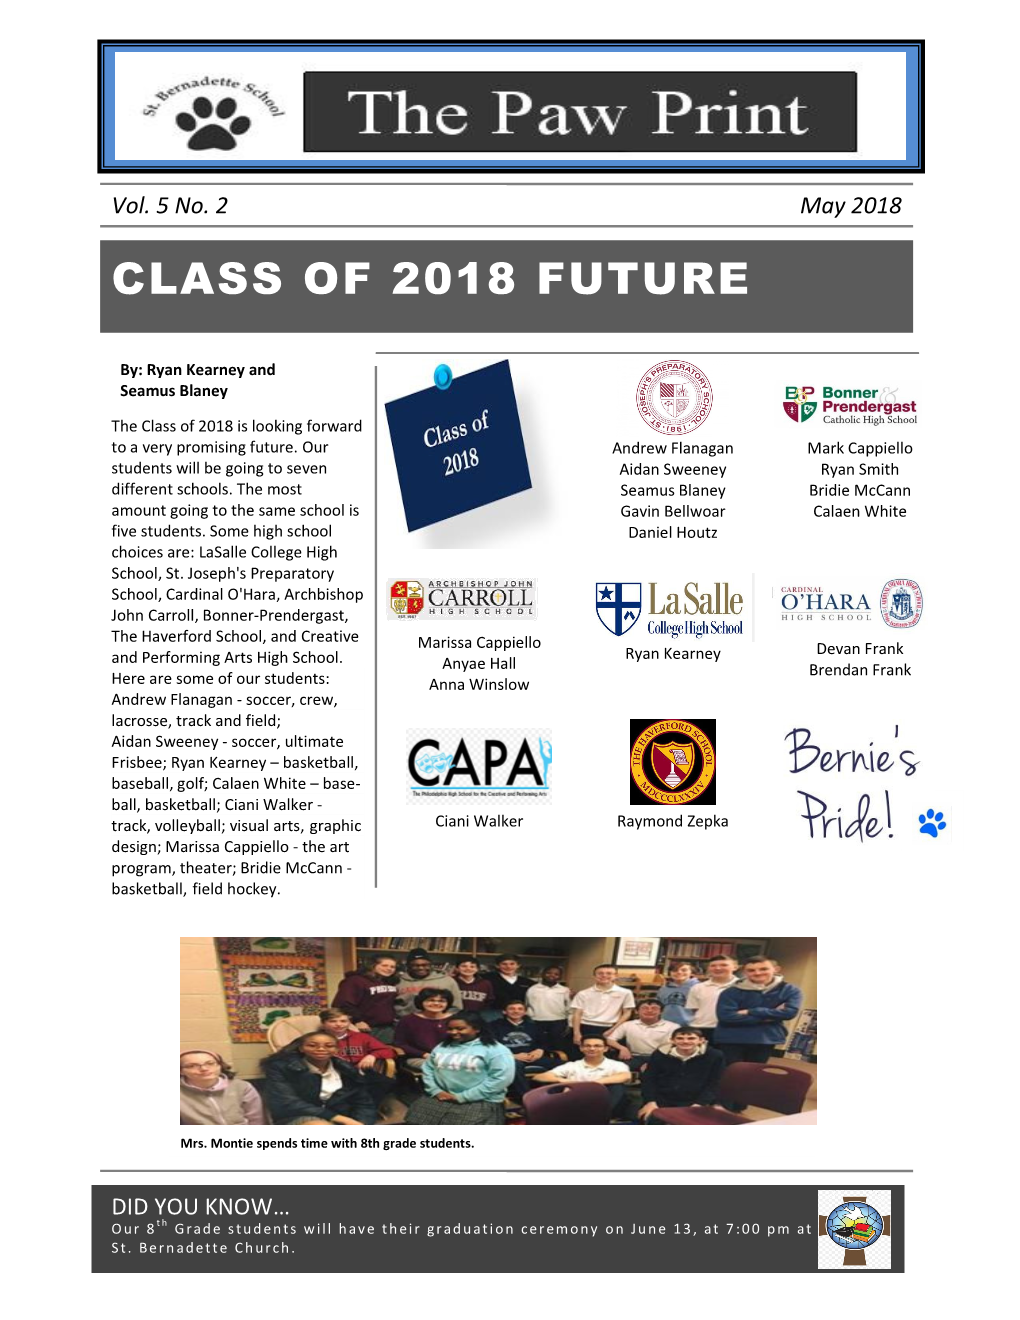 Class of 2018 Future